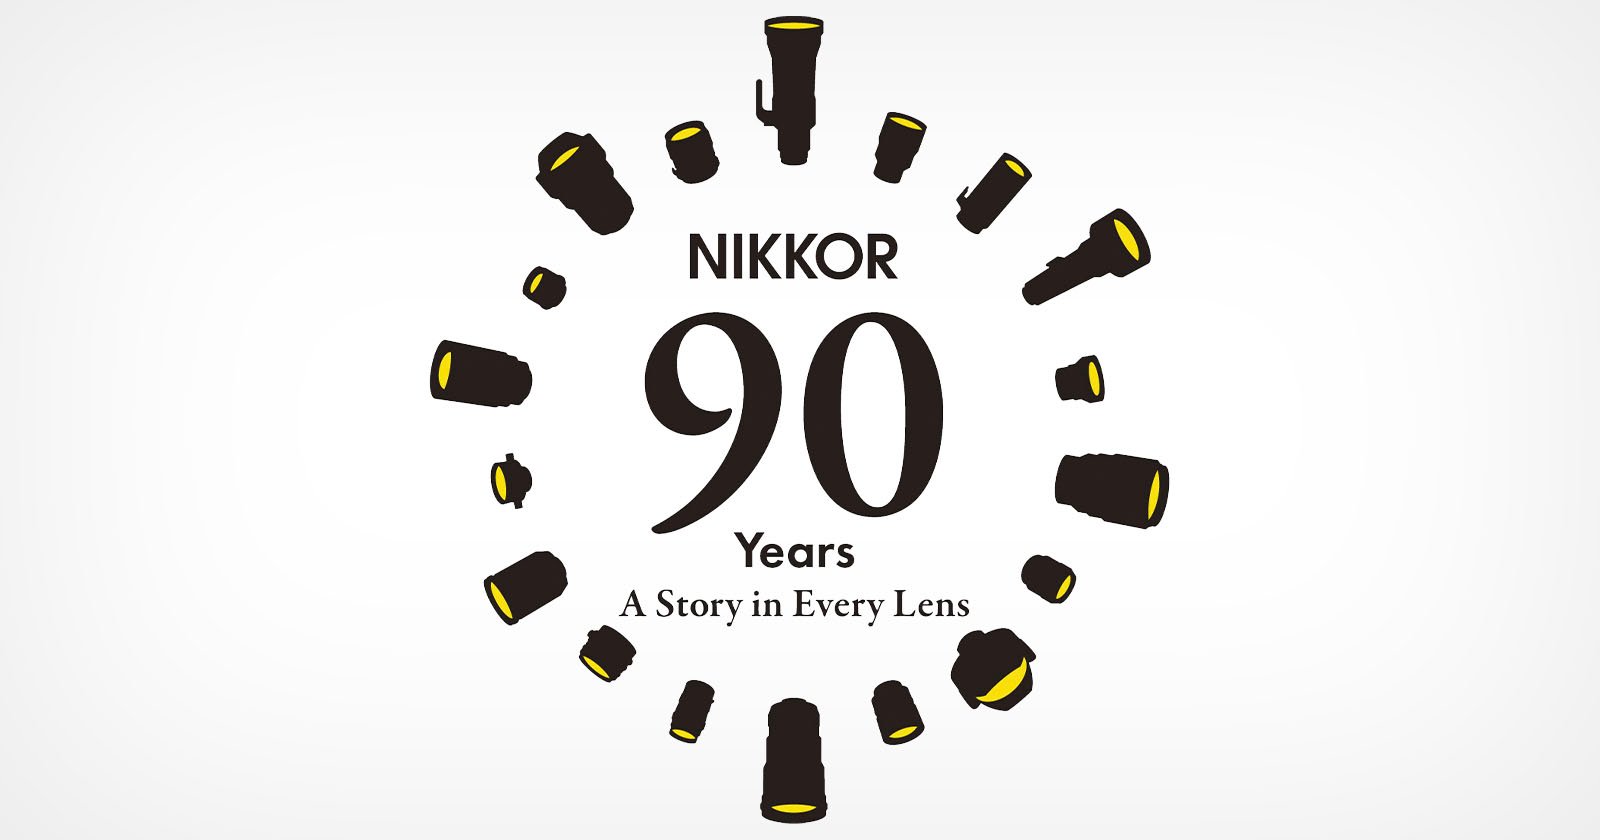  nikon celebrates years nikkor optics story every lens 